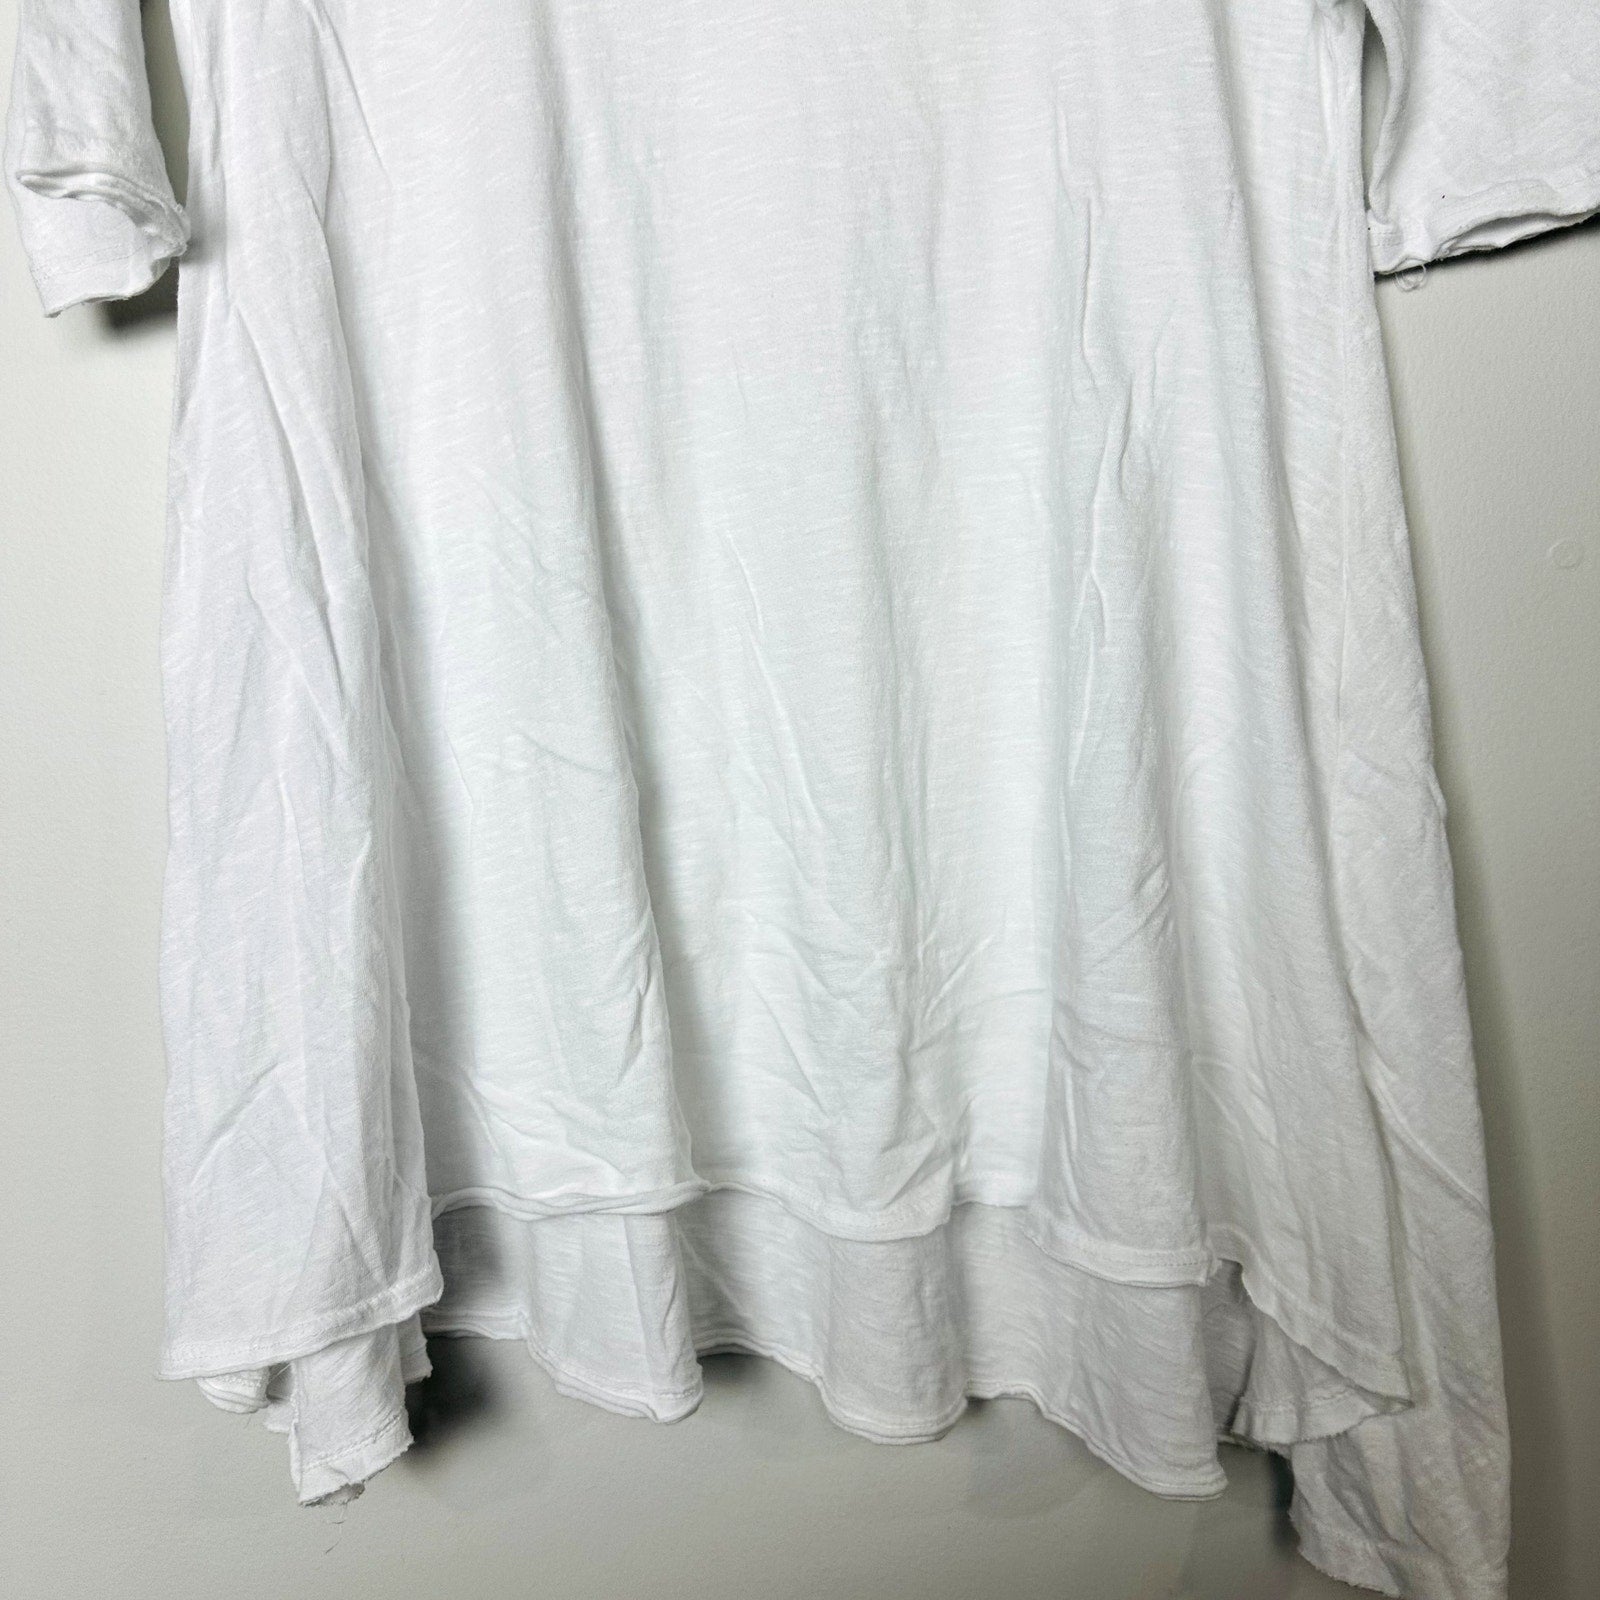 Free People NWOT Short Sleeve Shirt White Size Small